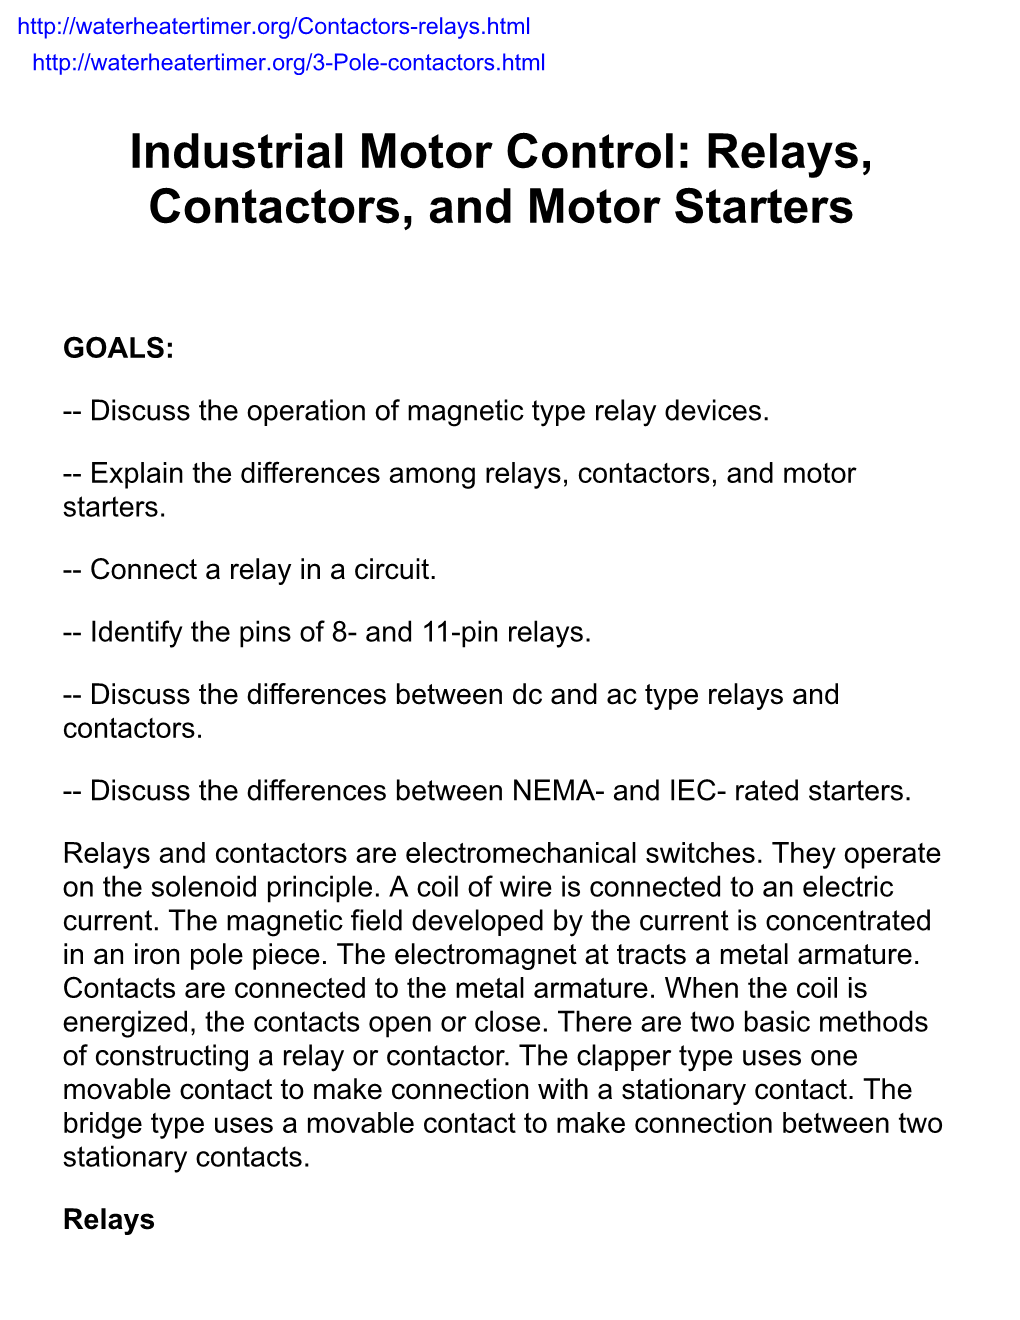 Relays, Contactors, and Motor Starters